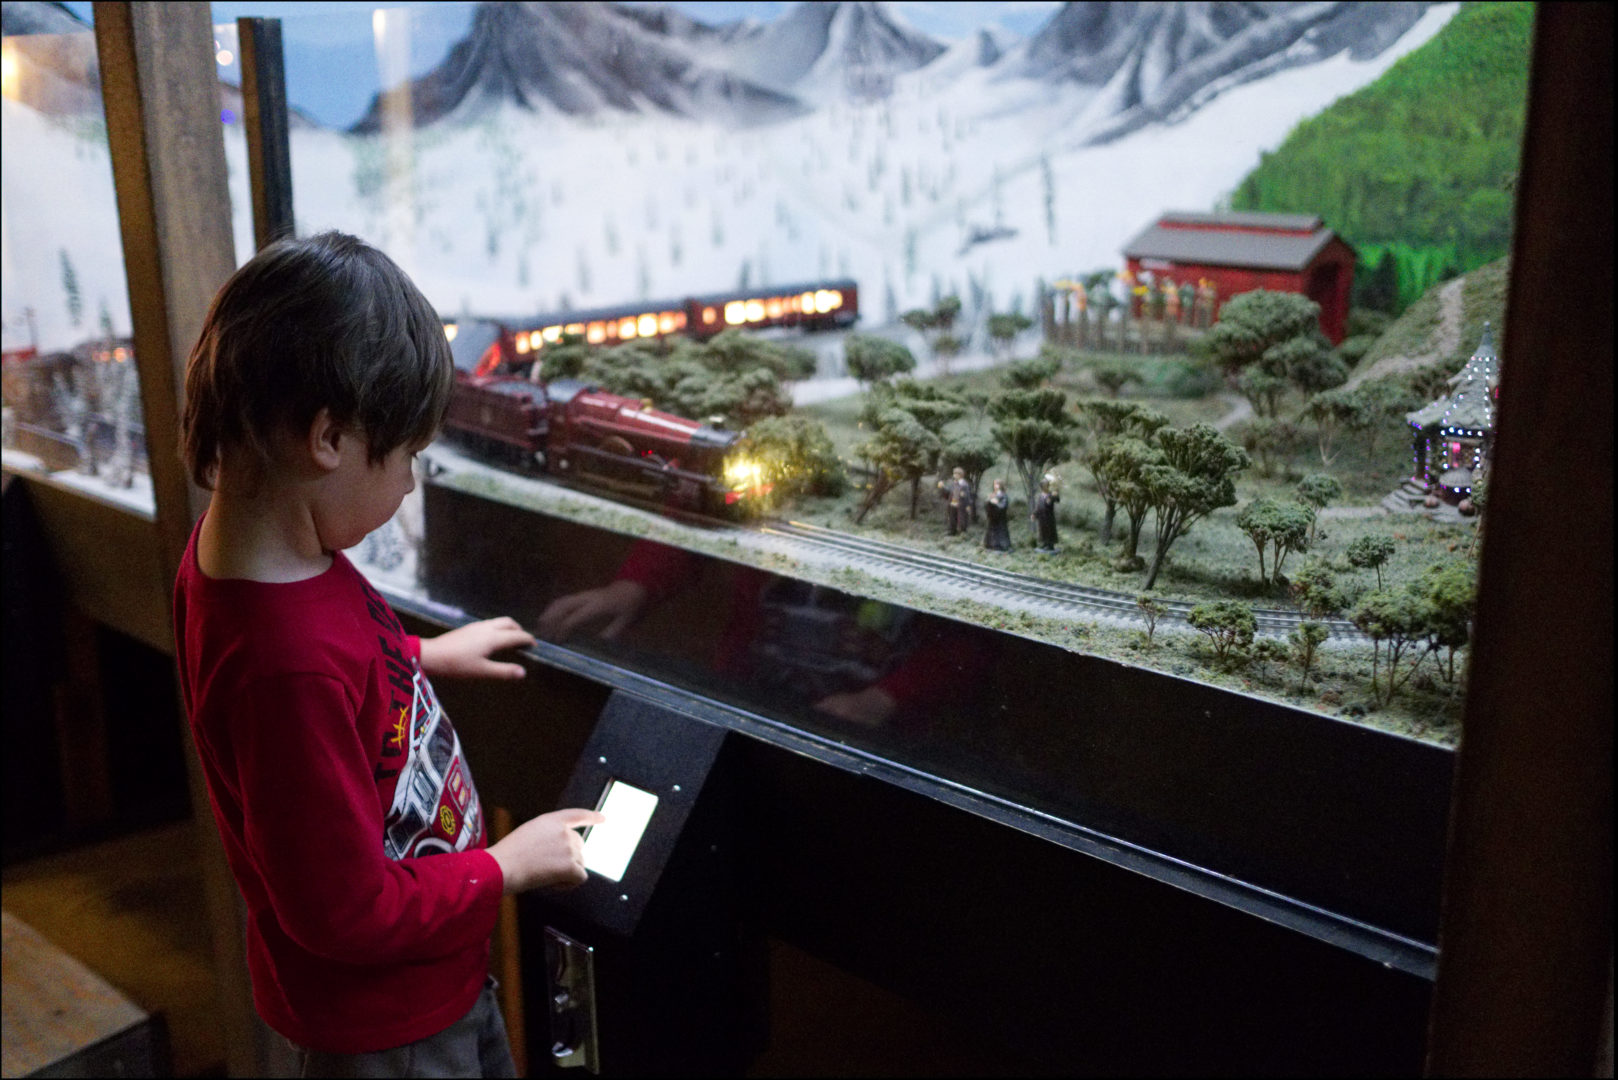 A little boy controls a model train set